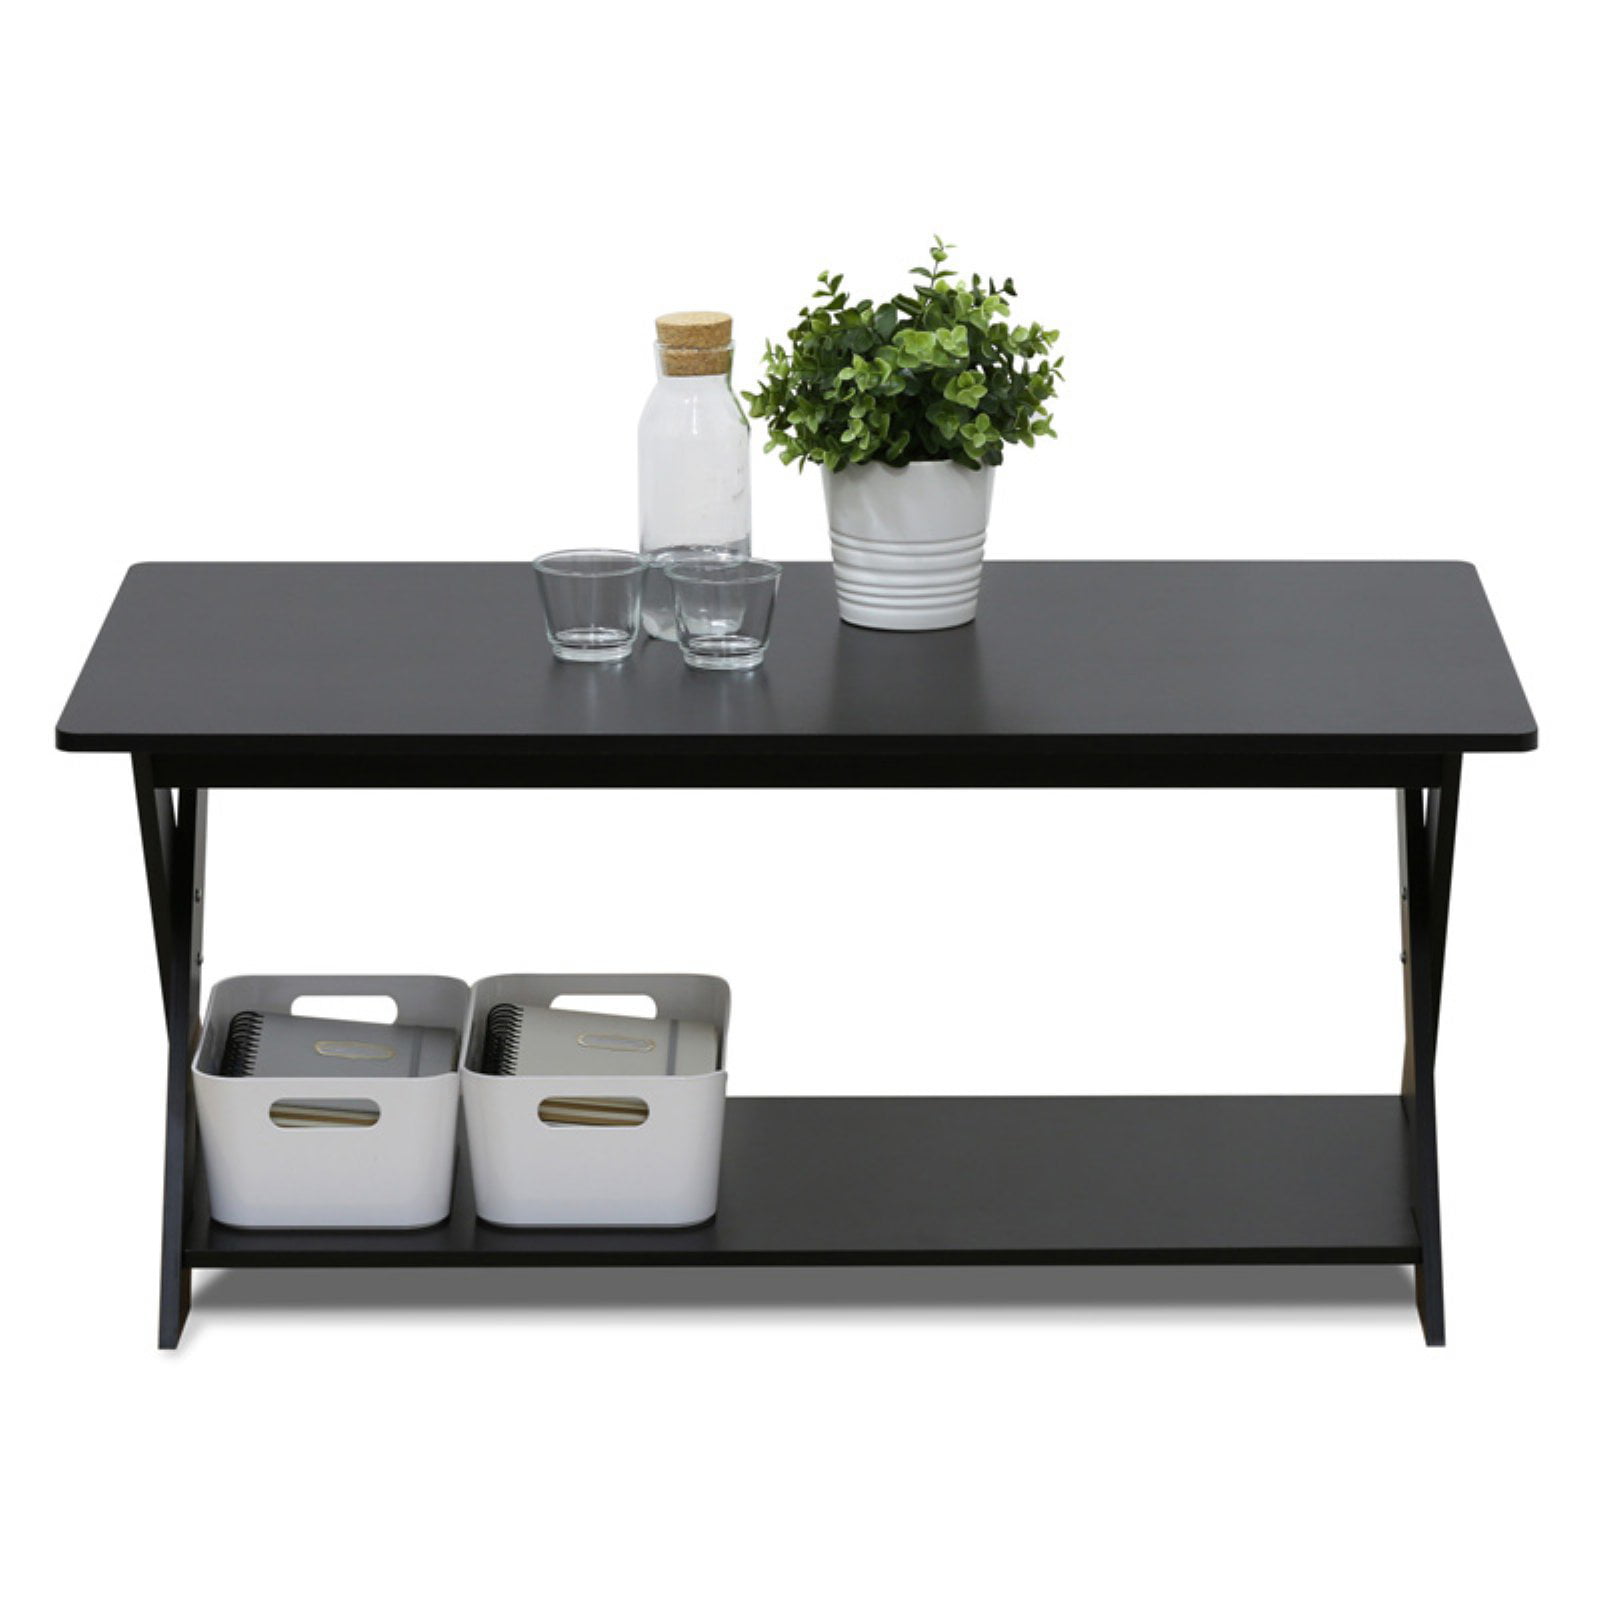 35.5" Furinno Modern Simplistic Criss-Crossed Coffee Table (Espresso) $27.65 + Free S&H w/ Walmart+ or $35+